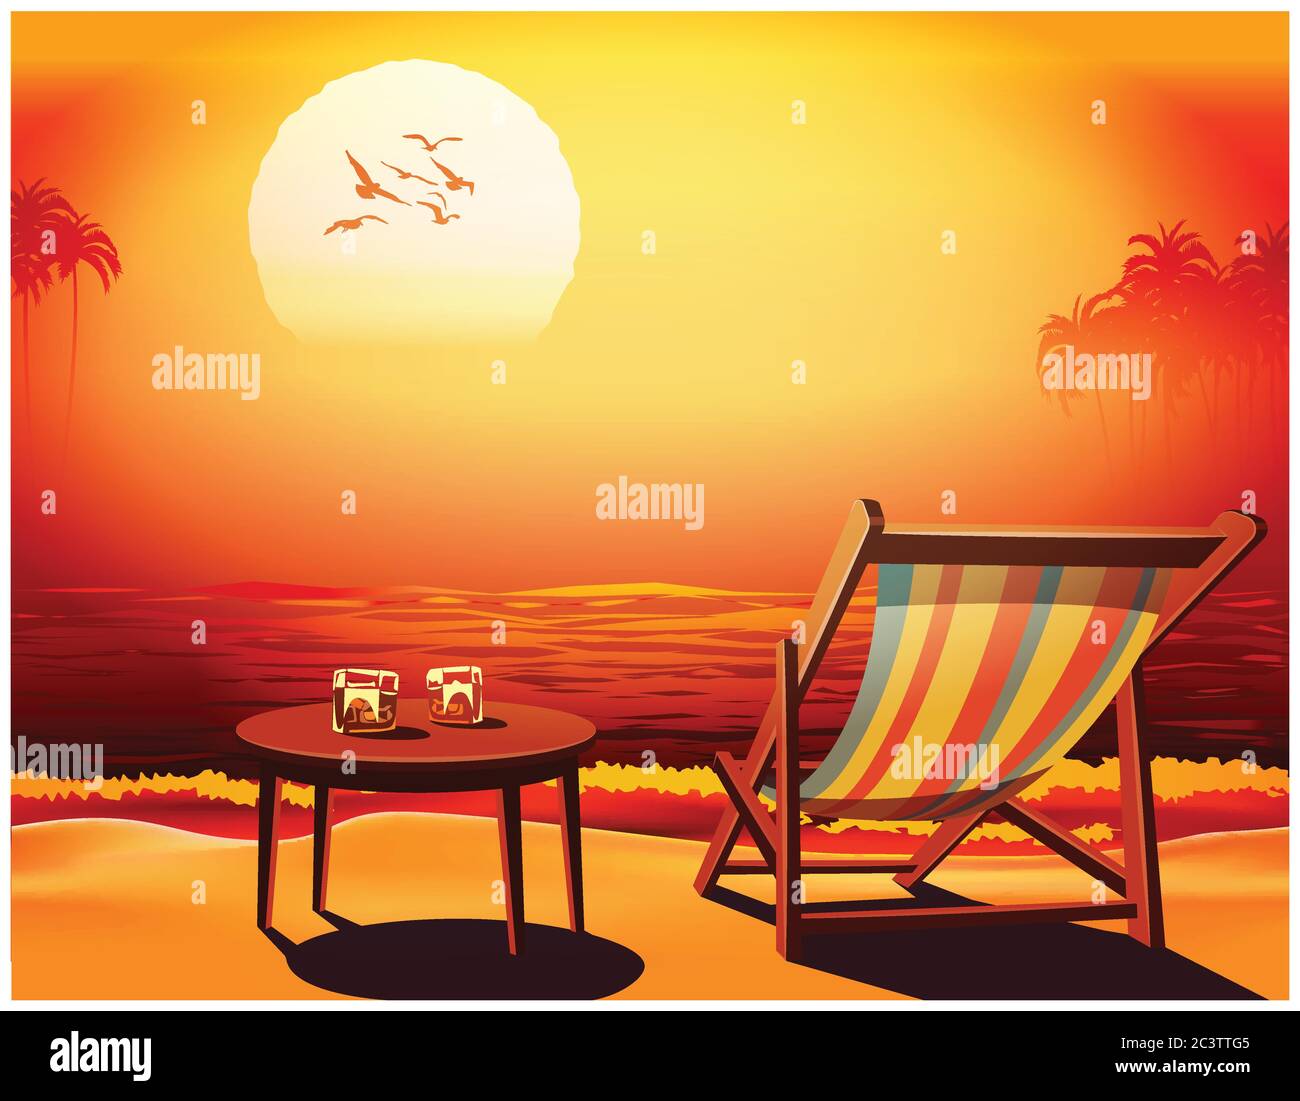 Chaiselongue, Tisch und zwei Gläser Whiskey am Meer gegen den Sonnenuntergang Stock Vektor